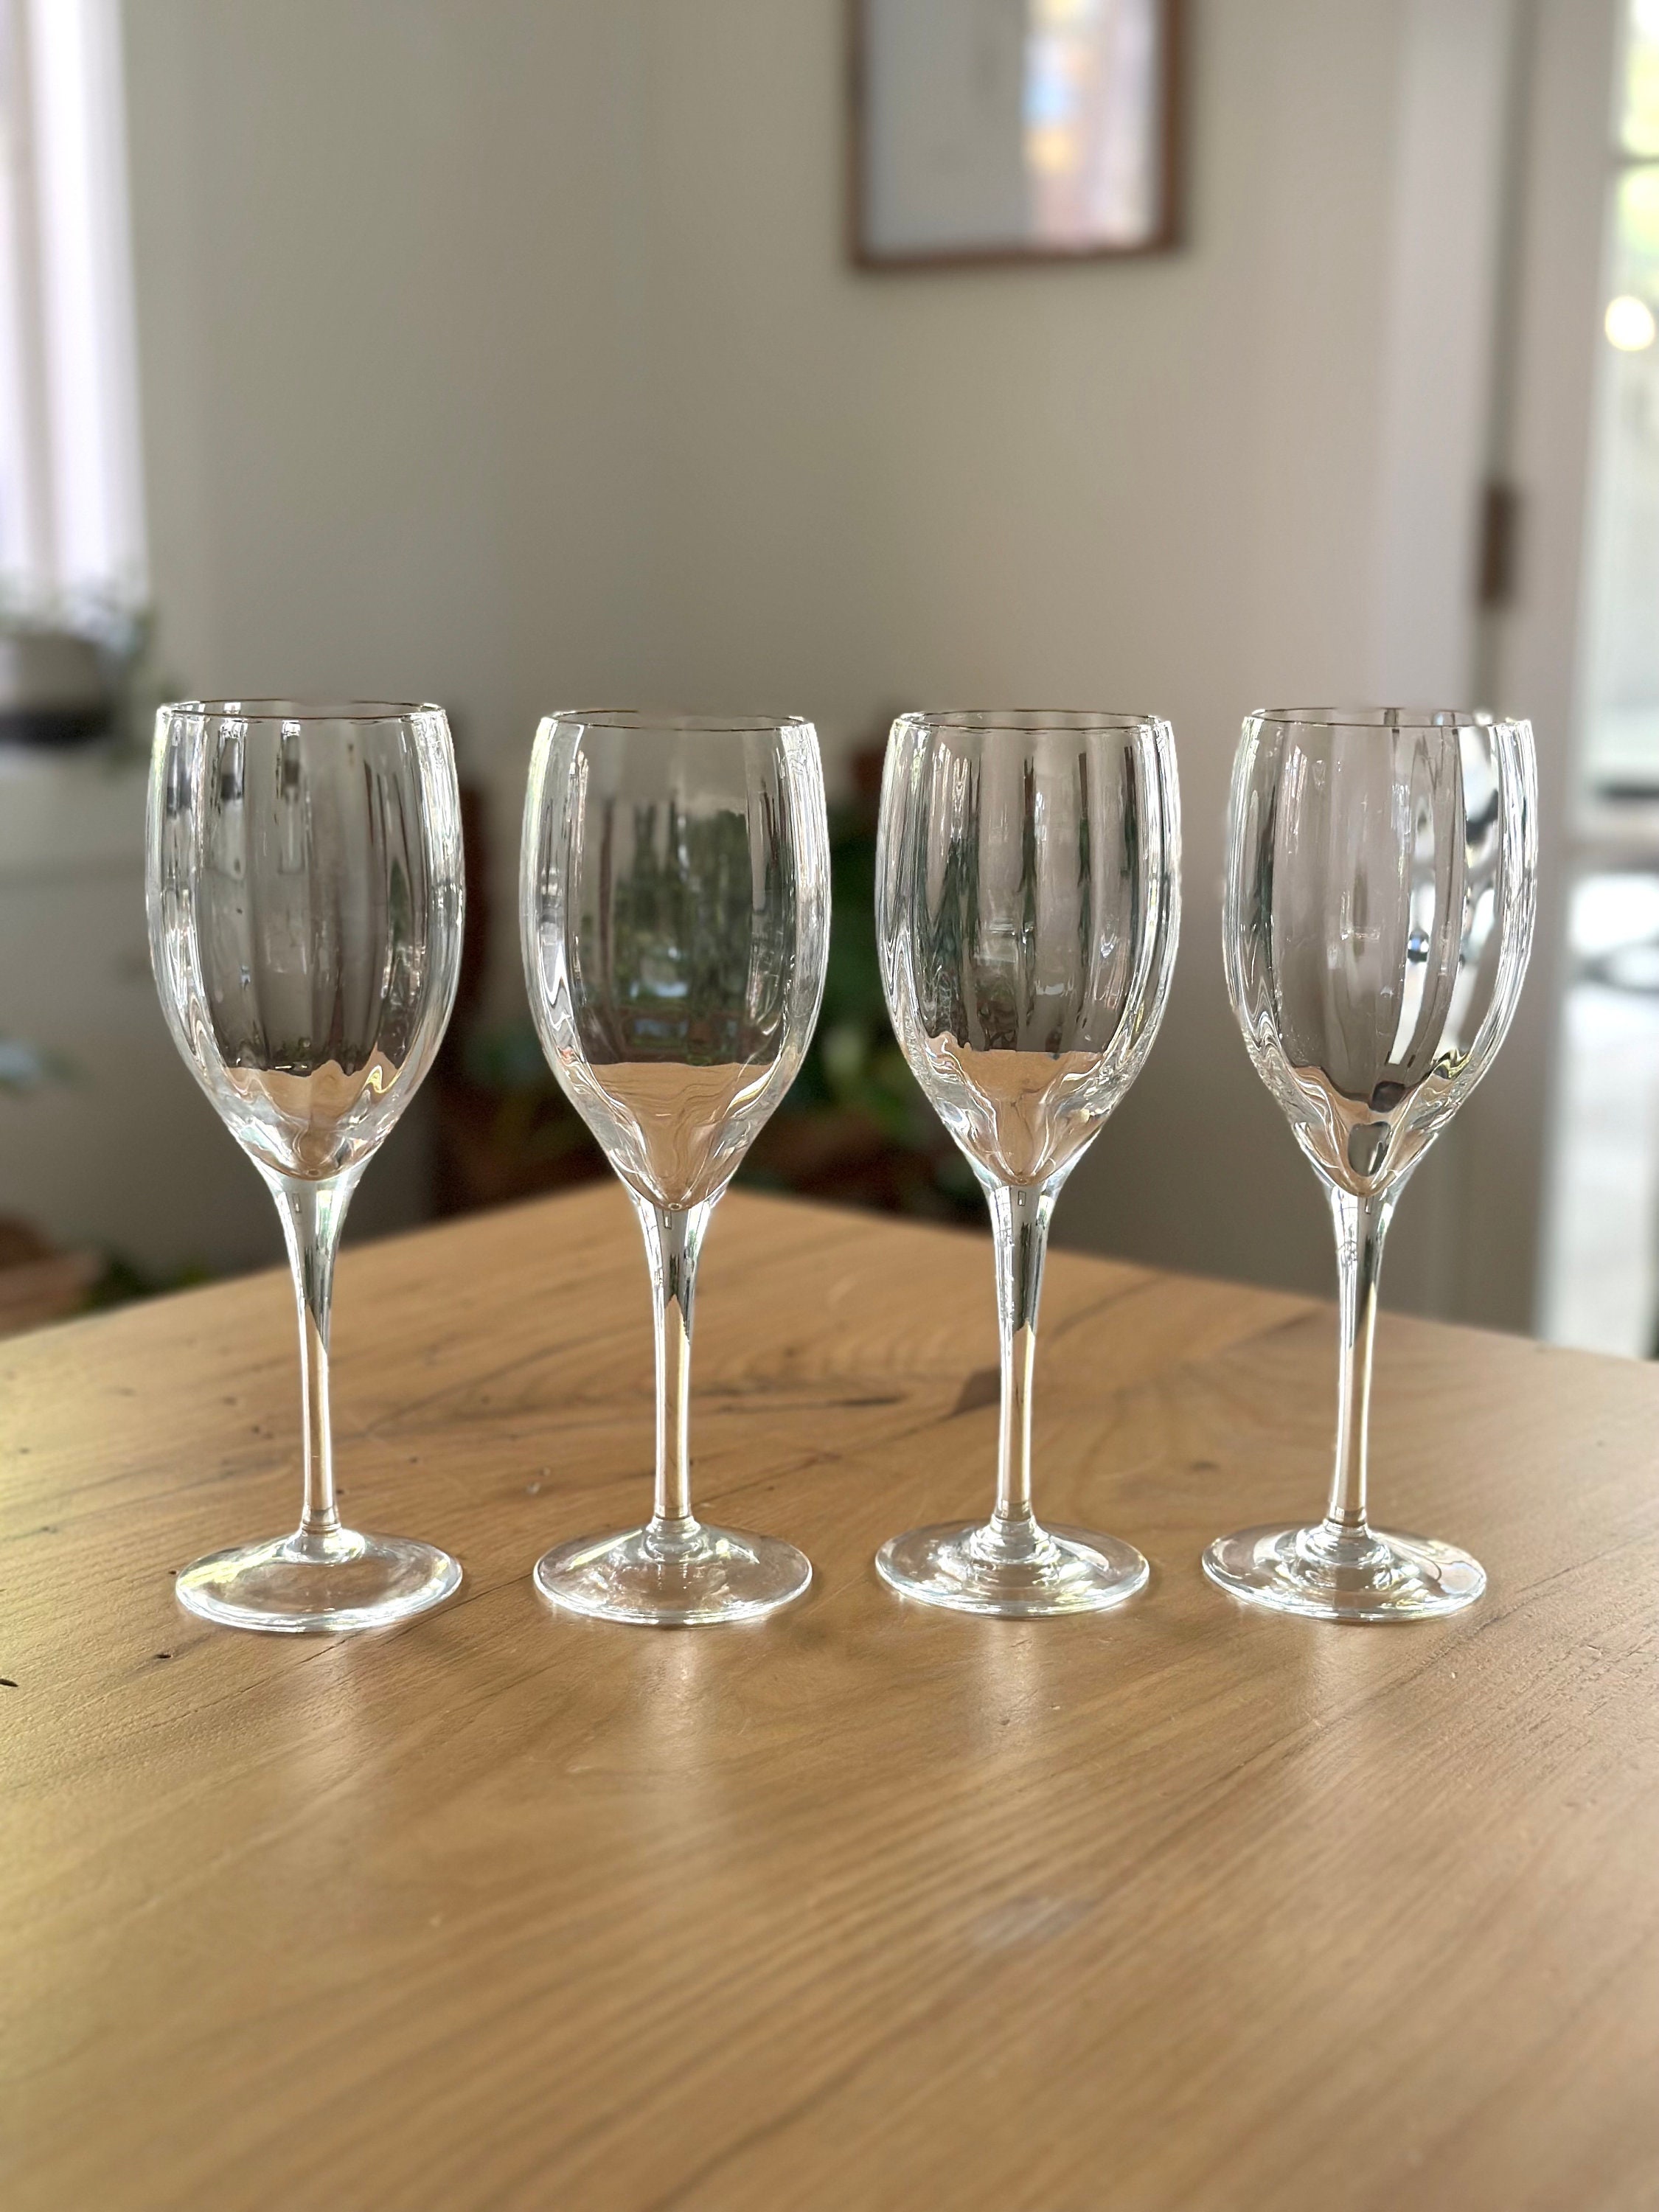 URMAGIC Ribbed Glassware,1 Pcs 25 Oz Vintage Drinking Glasses,Vertical  Stripes Beverage Glasses,Crea…See more URMAGIC Ribbed Glassware,1 Pcs 25 Oz